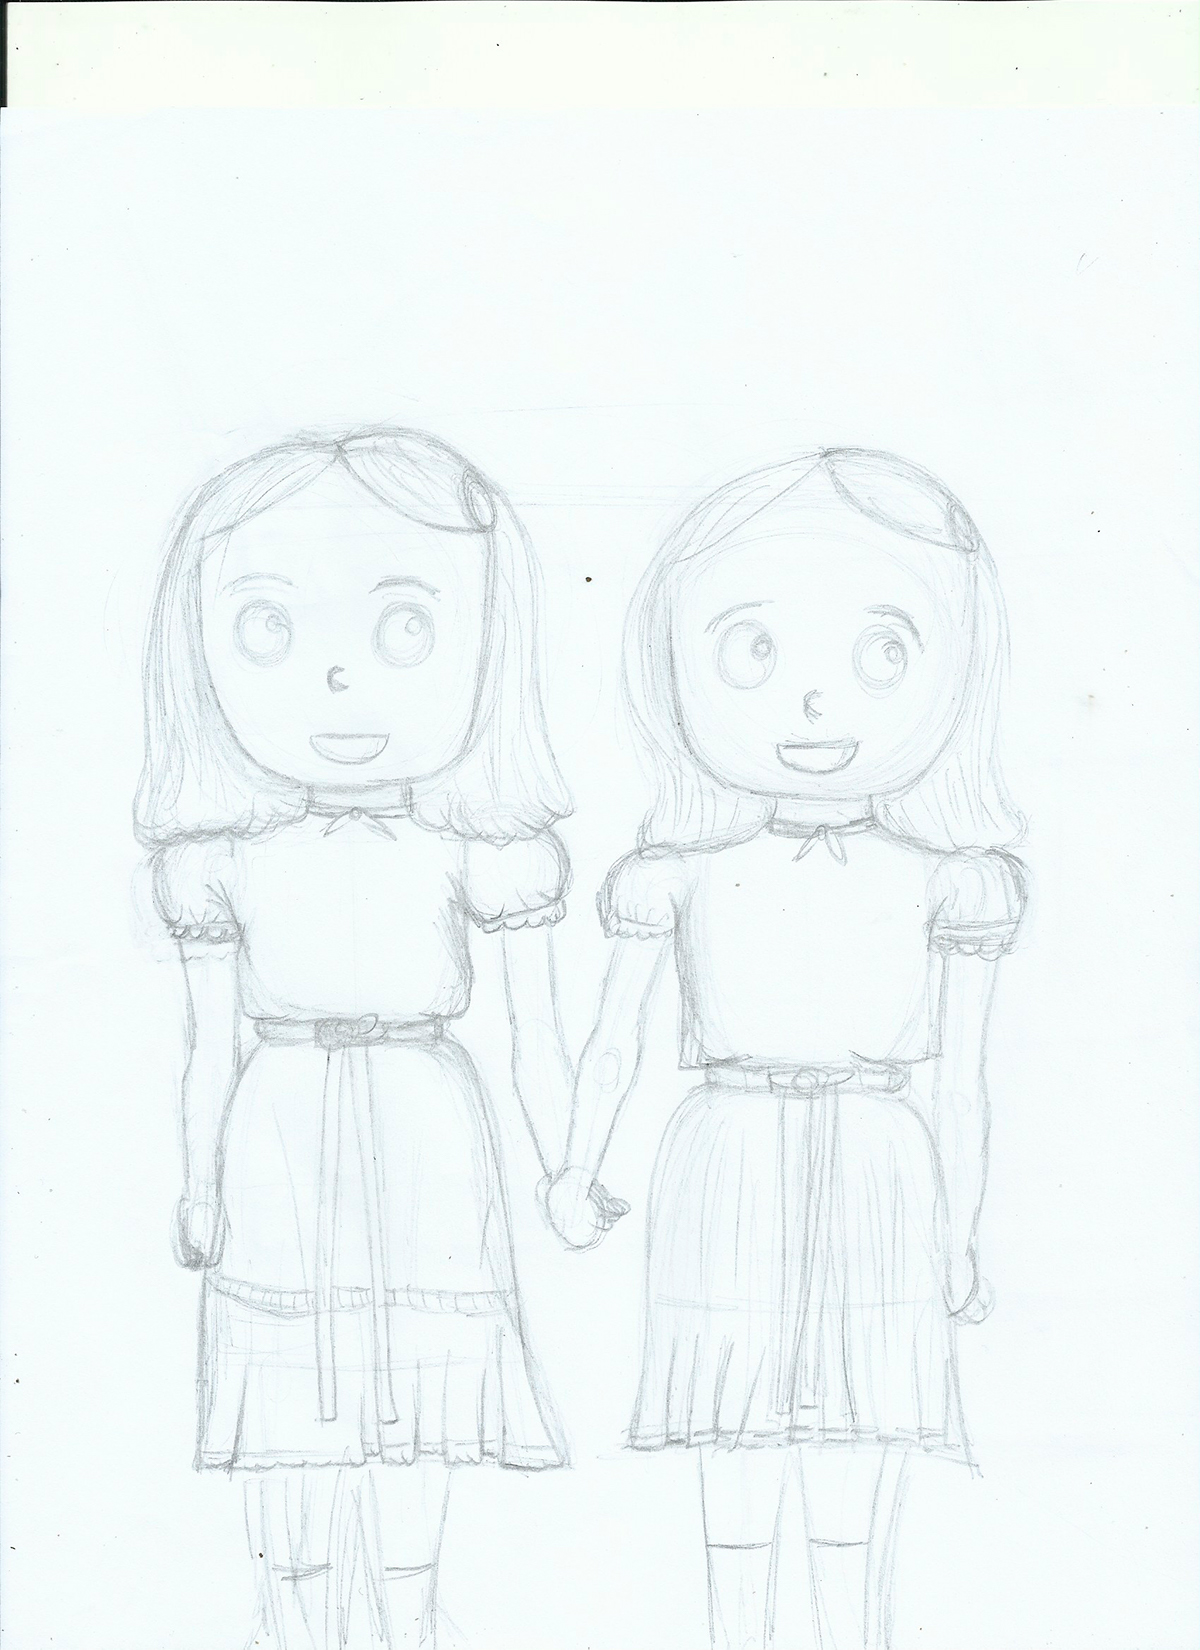 redrum lapiz boceto dibujo draw art sketch Twins shining danny movie Cinema characters evil Style